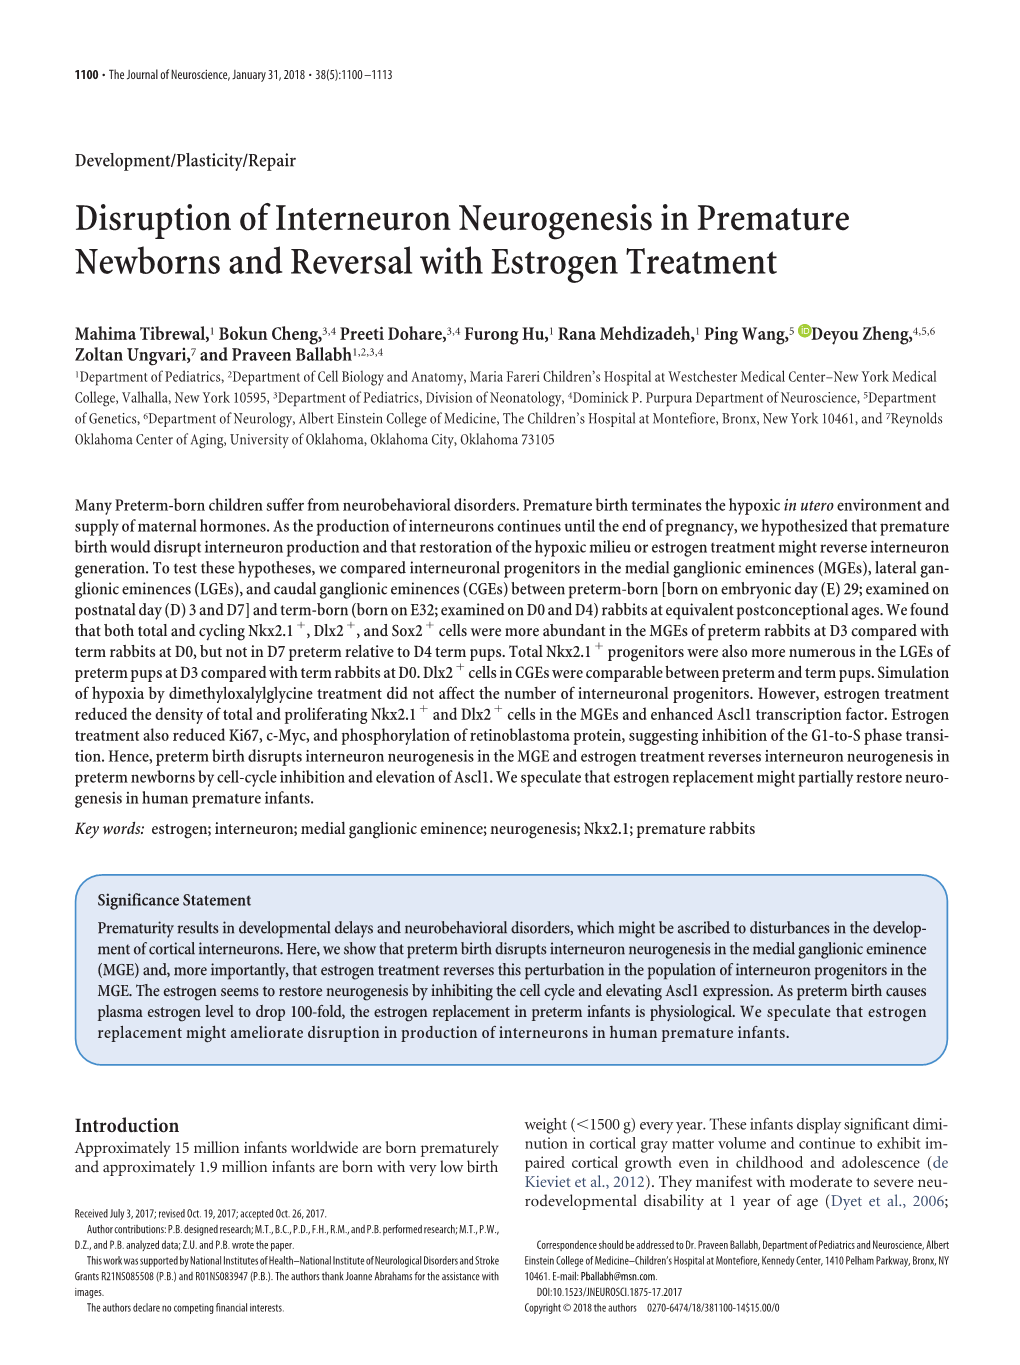 Disruption of Interneuron Neurogenesis in Premature Newborns and Reversal with Estrogen Treatment